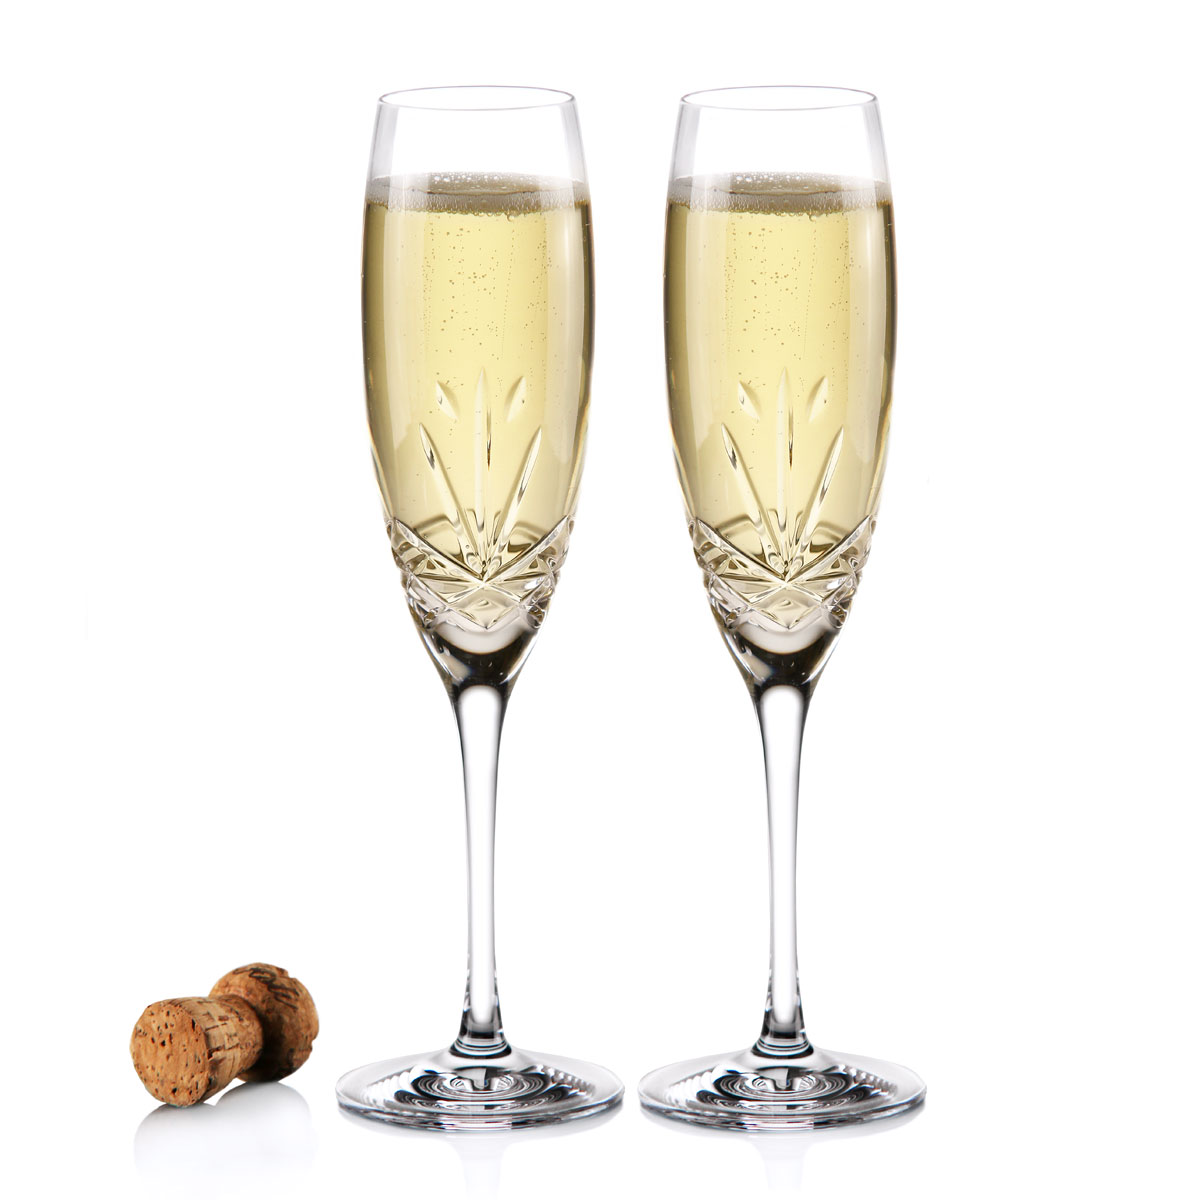 Cashs Ireland Annestown Champagne Toasting Flutes, Pair